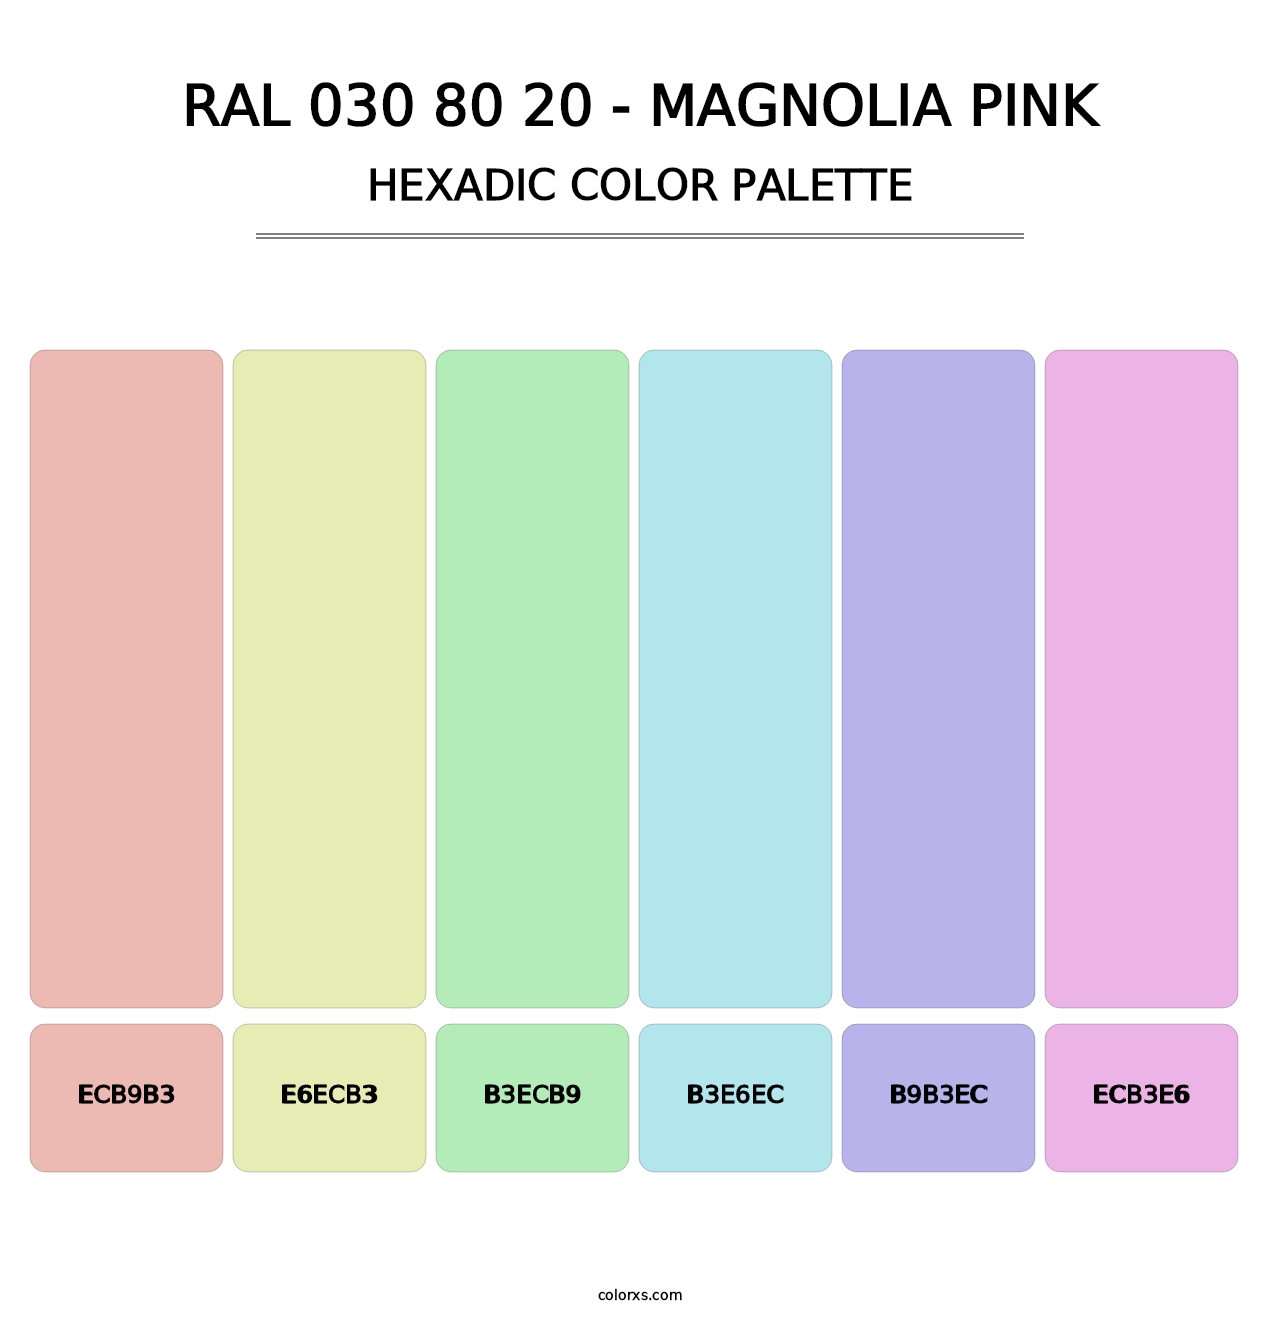 RAL 030 80 20 - Magnolia Pink - Hexadic Color Palette